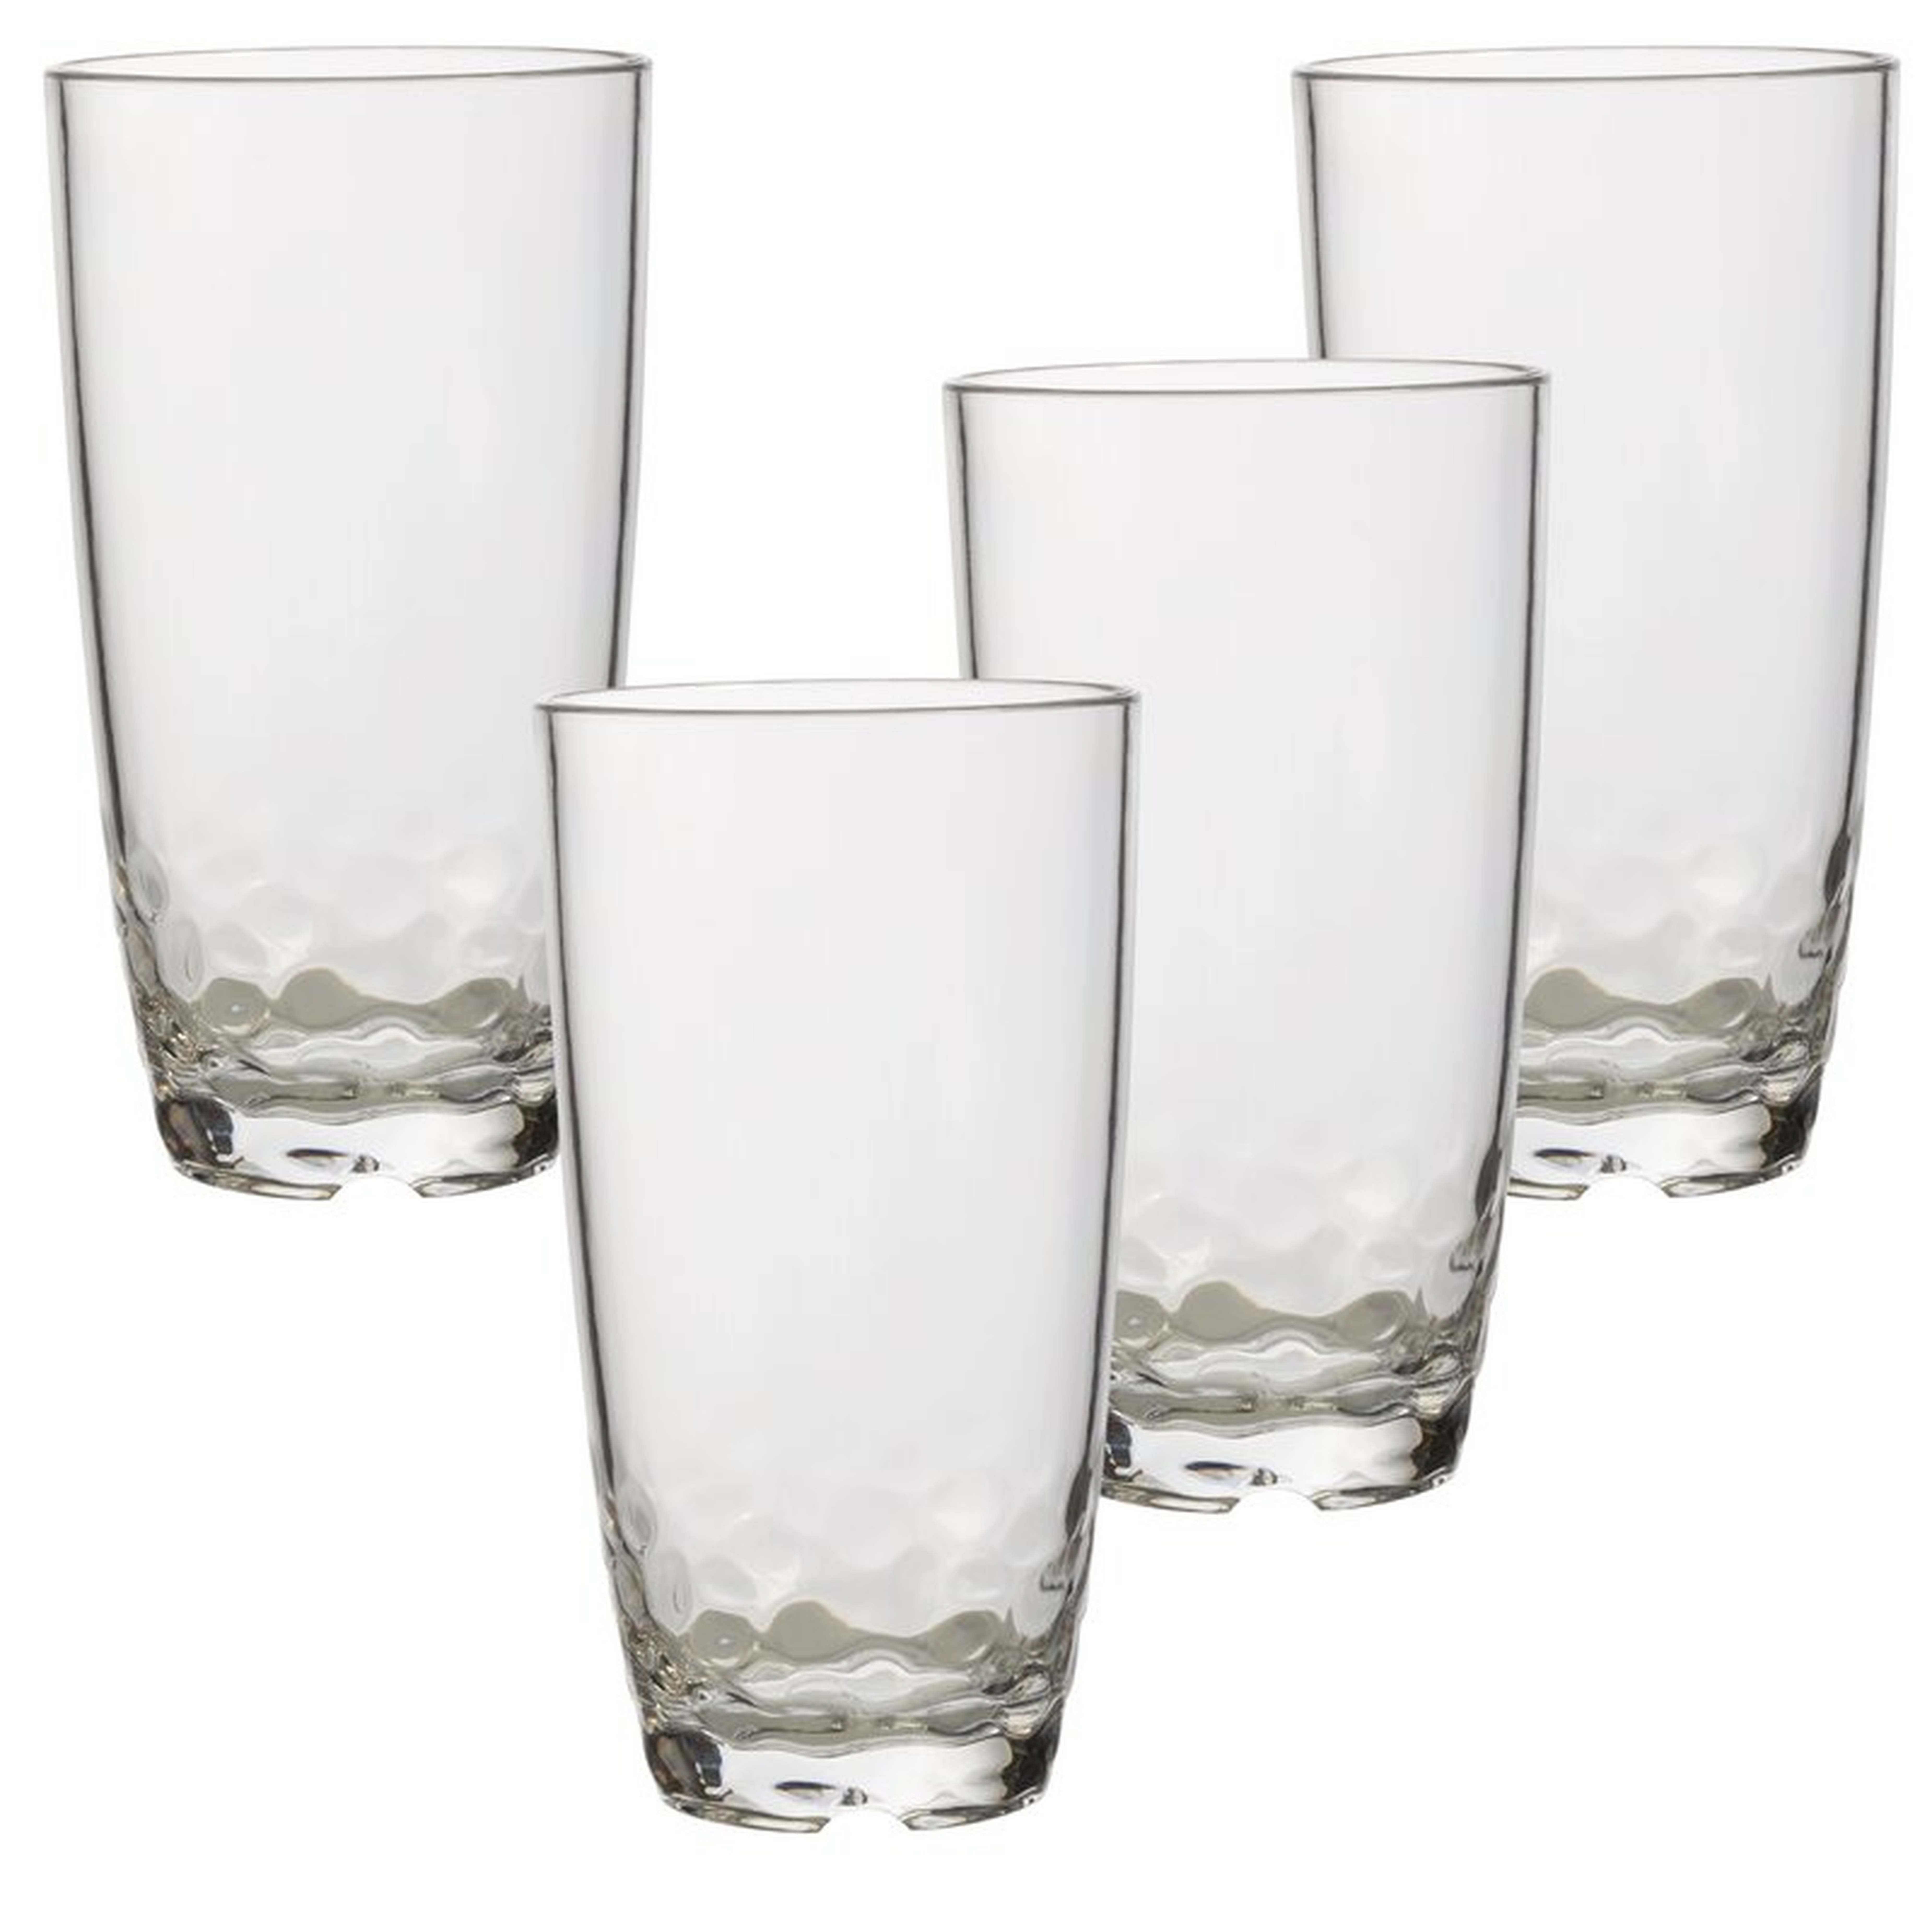 Mary 24 oz. Acrylic Drinking Glass (Set of 4) - Wayfair